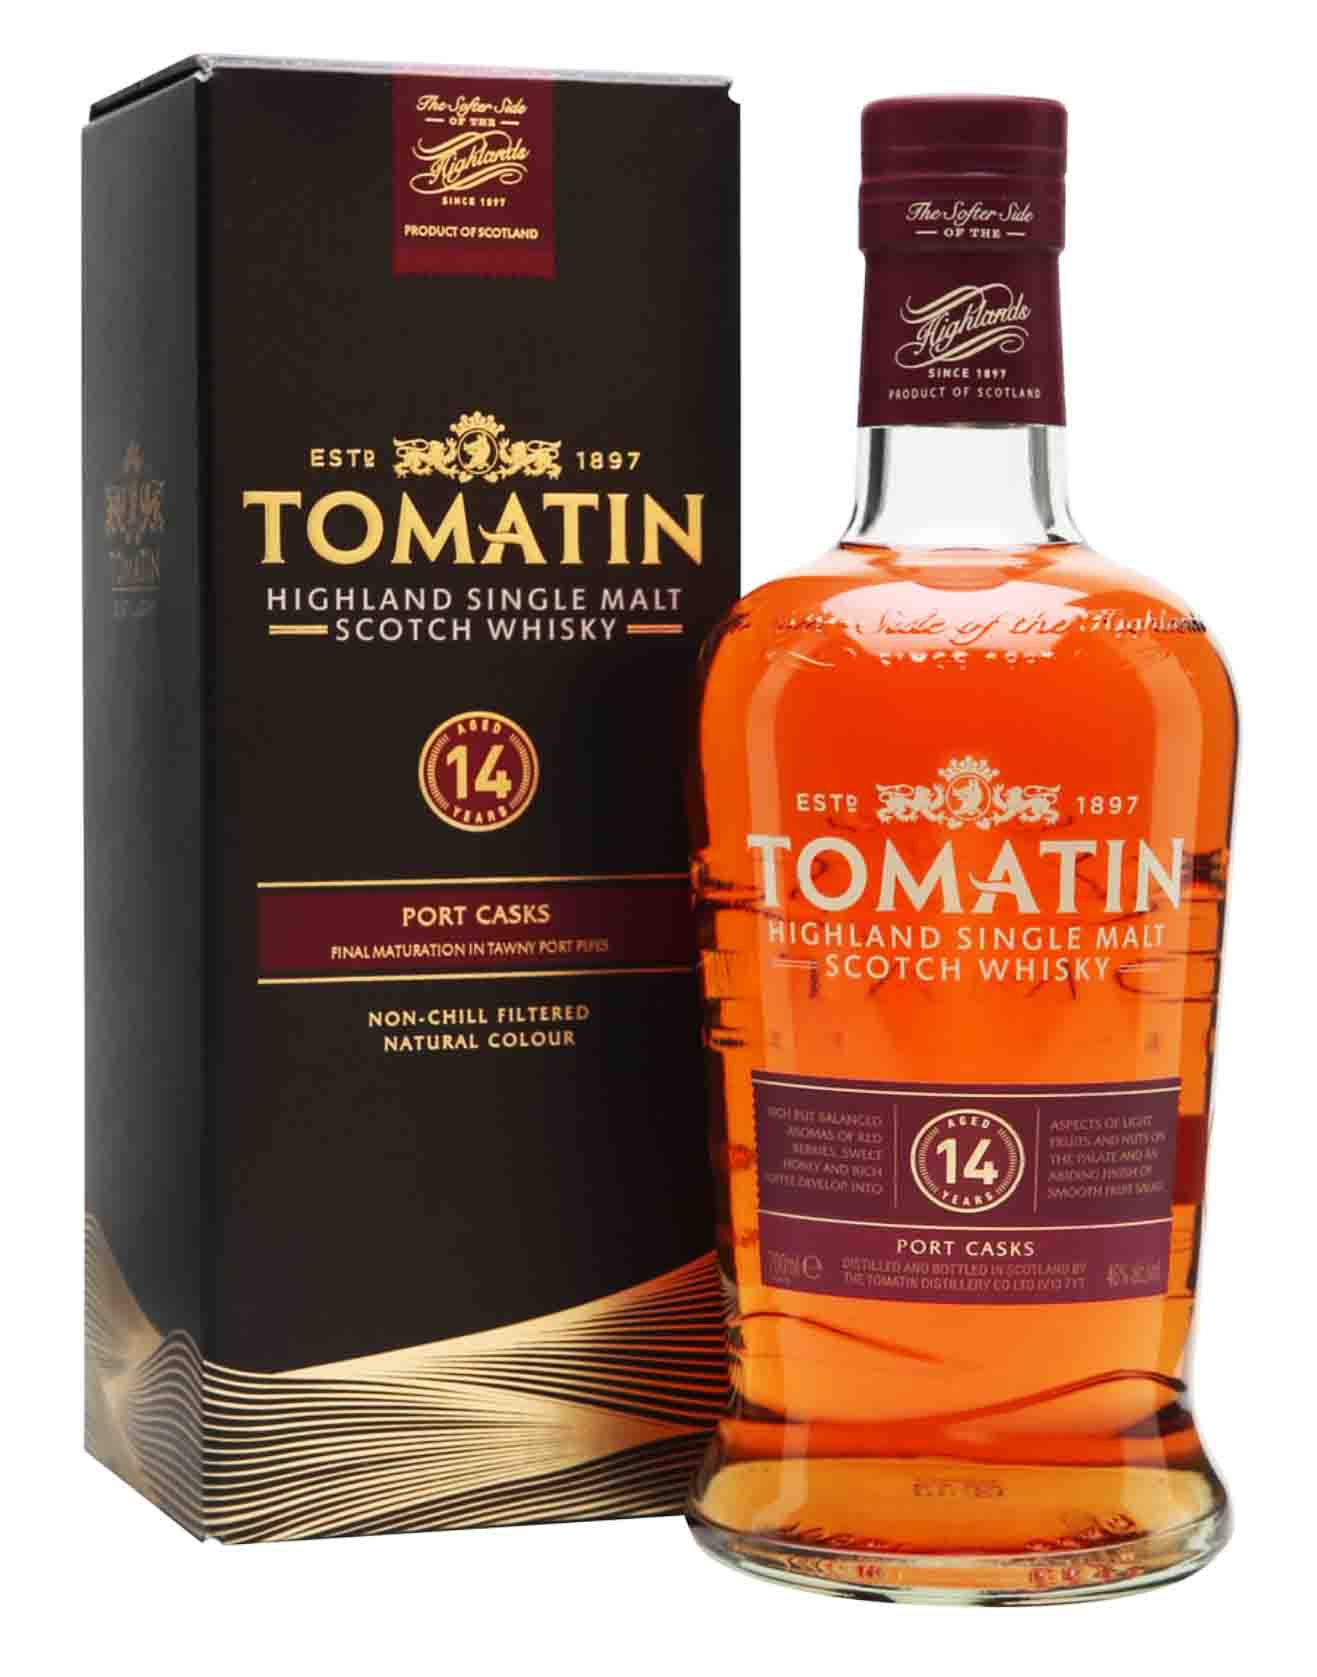 Tomatin 14 year old, Single Malt Whisky, 70cl